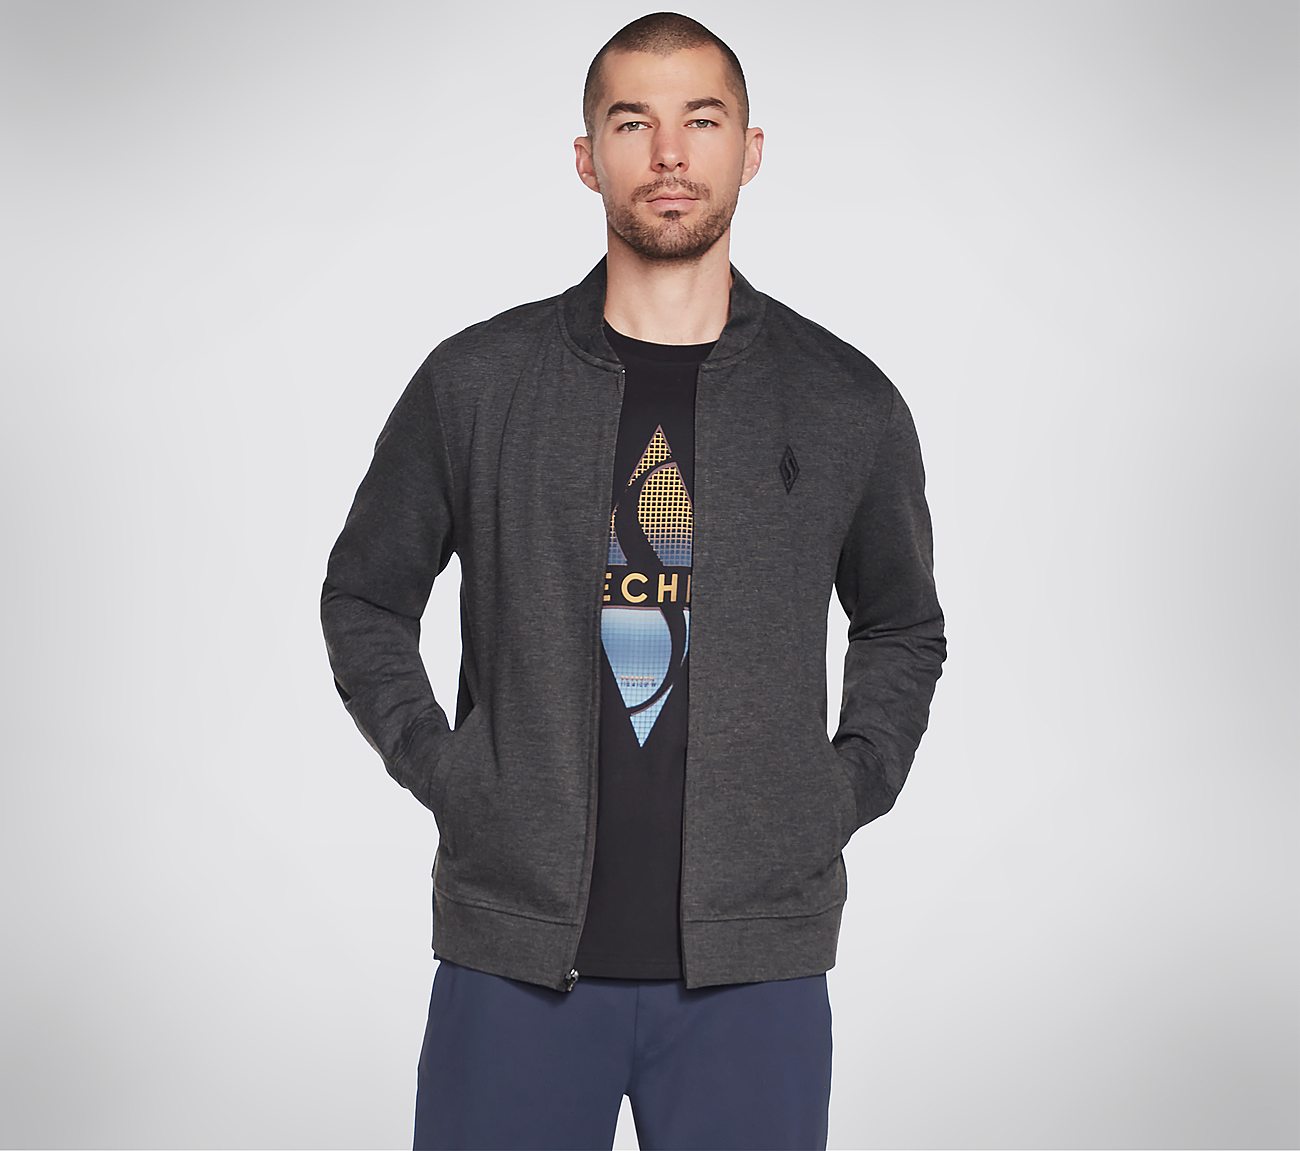 Skechers Goknit Ultra Jacket, Charcoal Jacket For Men